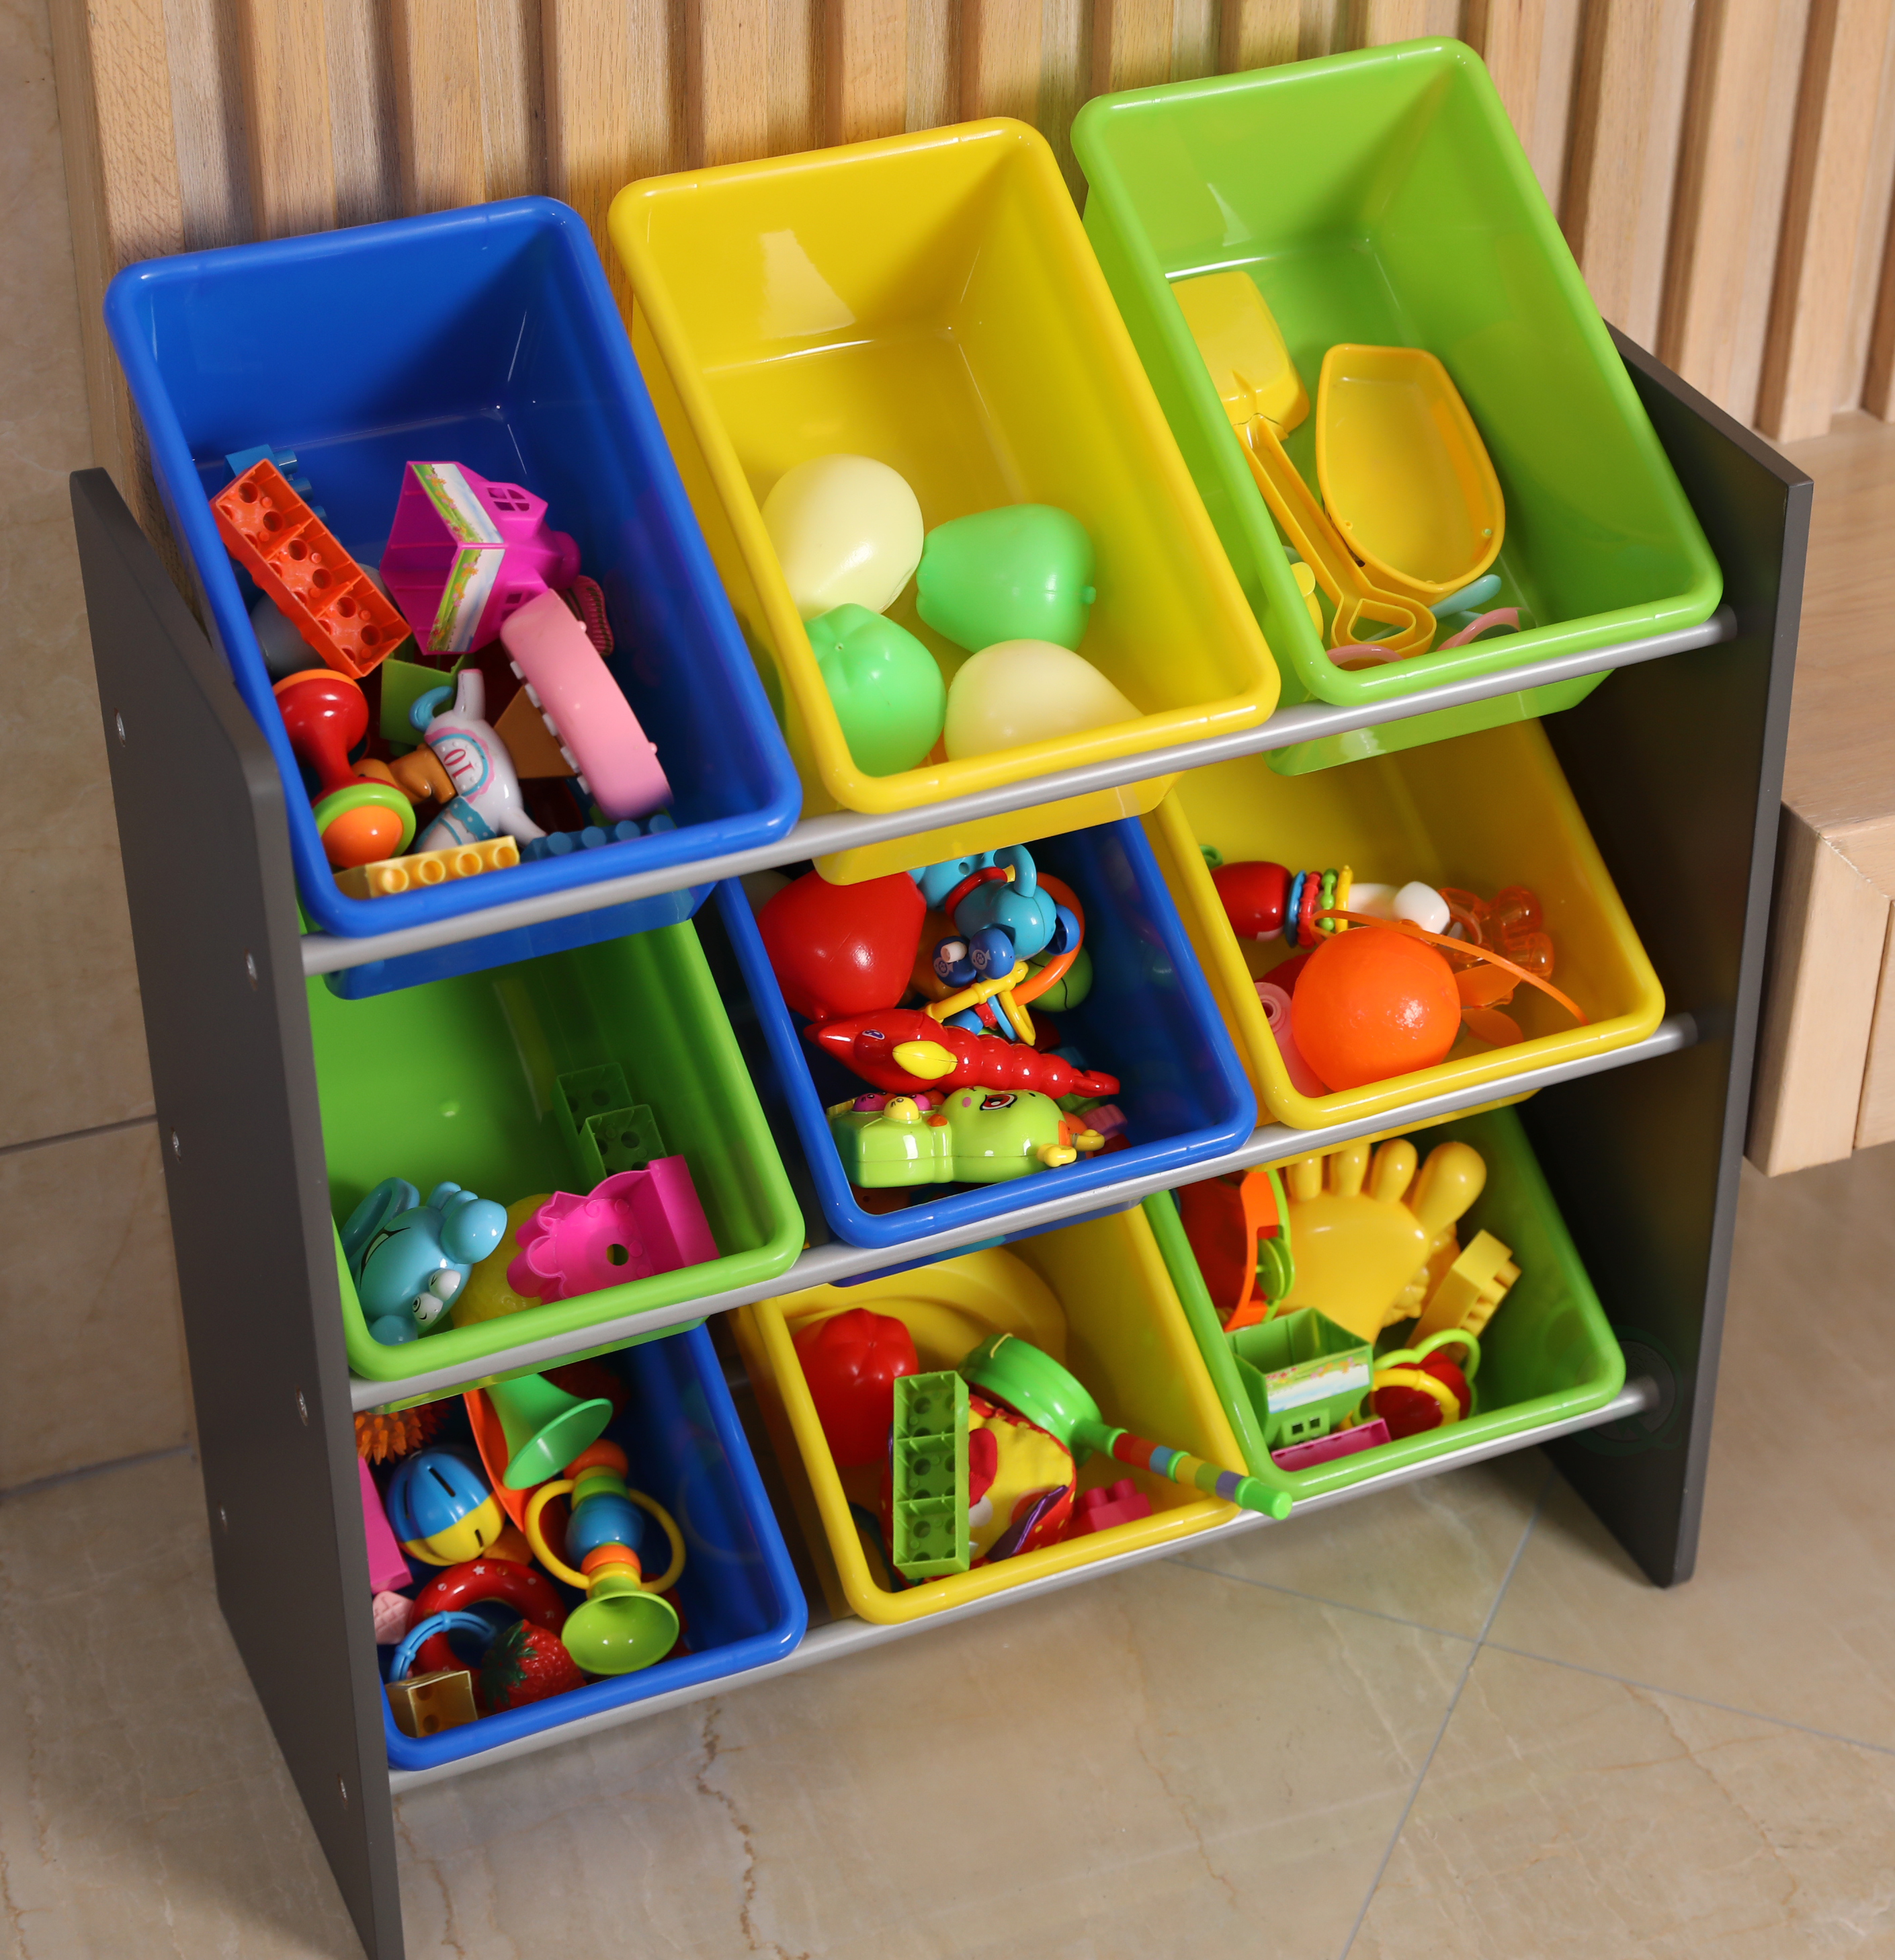 New Basicwise 3-Tier Kid's Toy Storage Organizer with 9 Plastic Bins,QI003276 